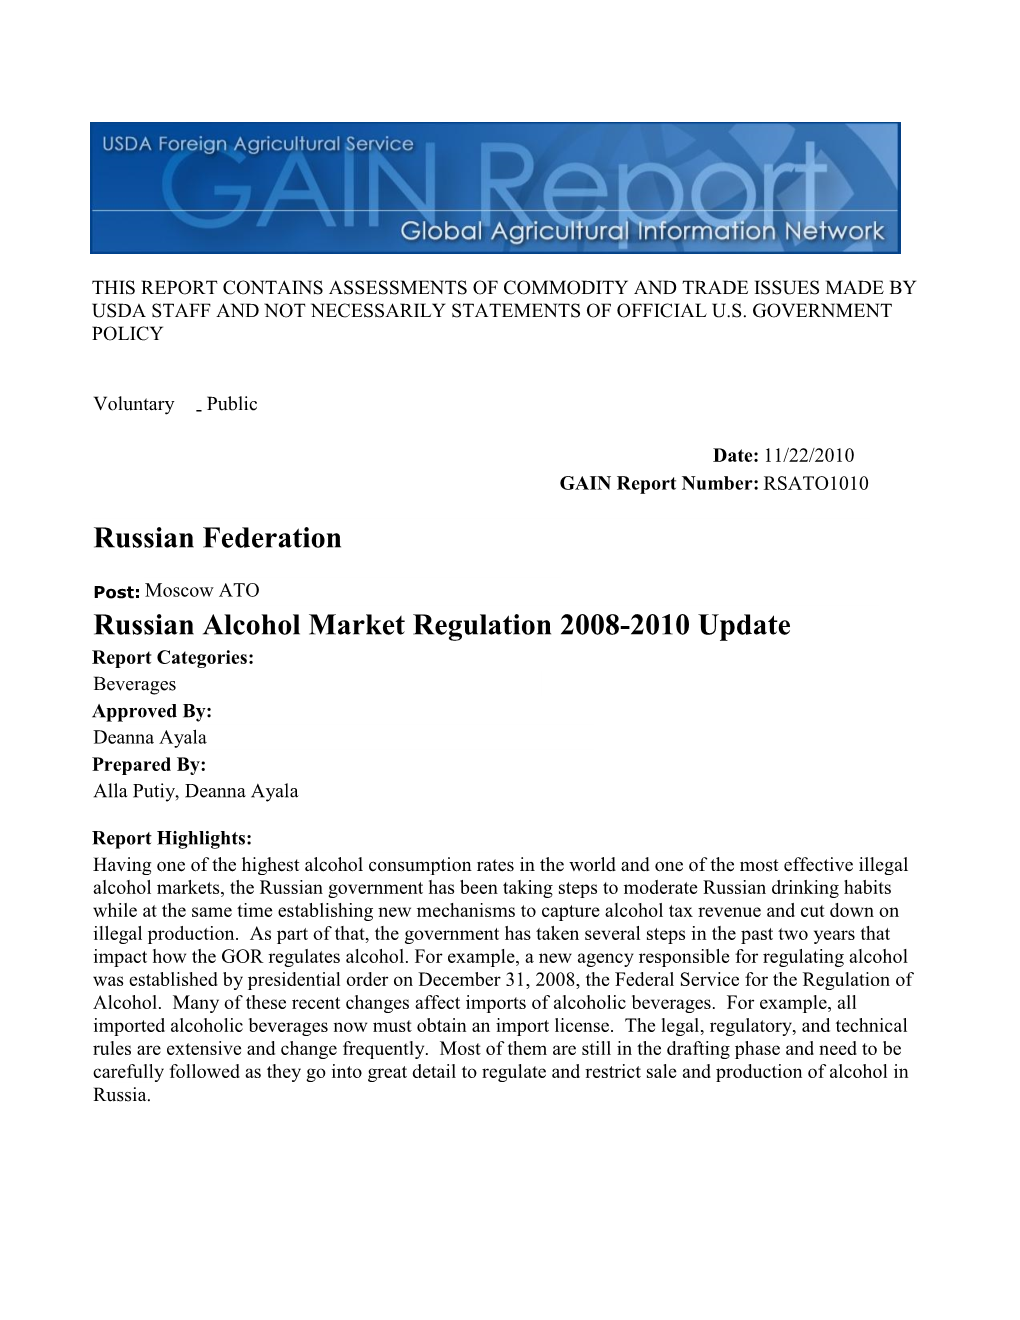 Russian Alcohol Market Regulation 2008-2010 Update Russian Federation